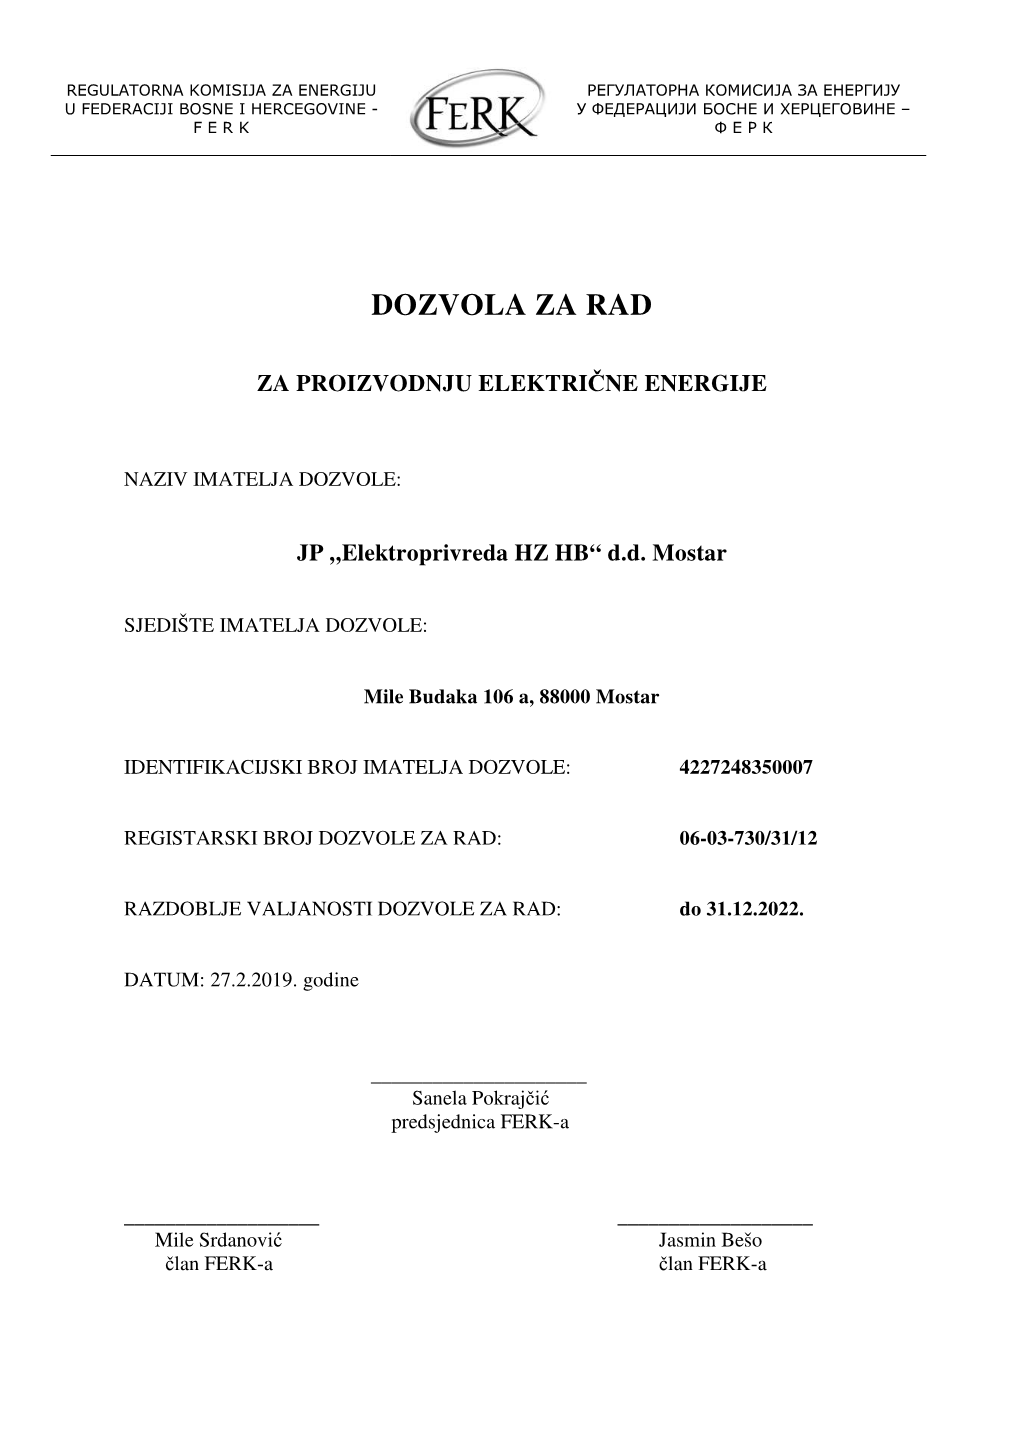 06-03-730/31/12 JP "Elektroprivreda HZ HB" D.D. Mostar Mile Budaka 106 A, 88000